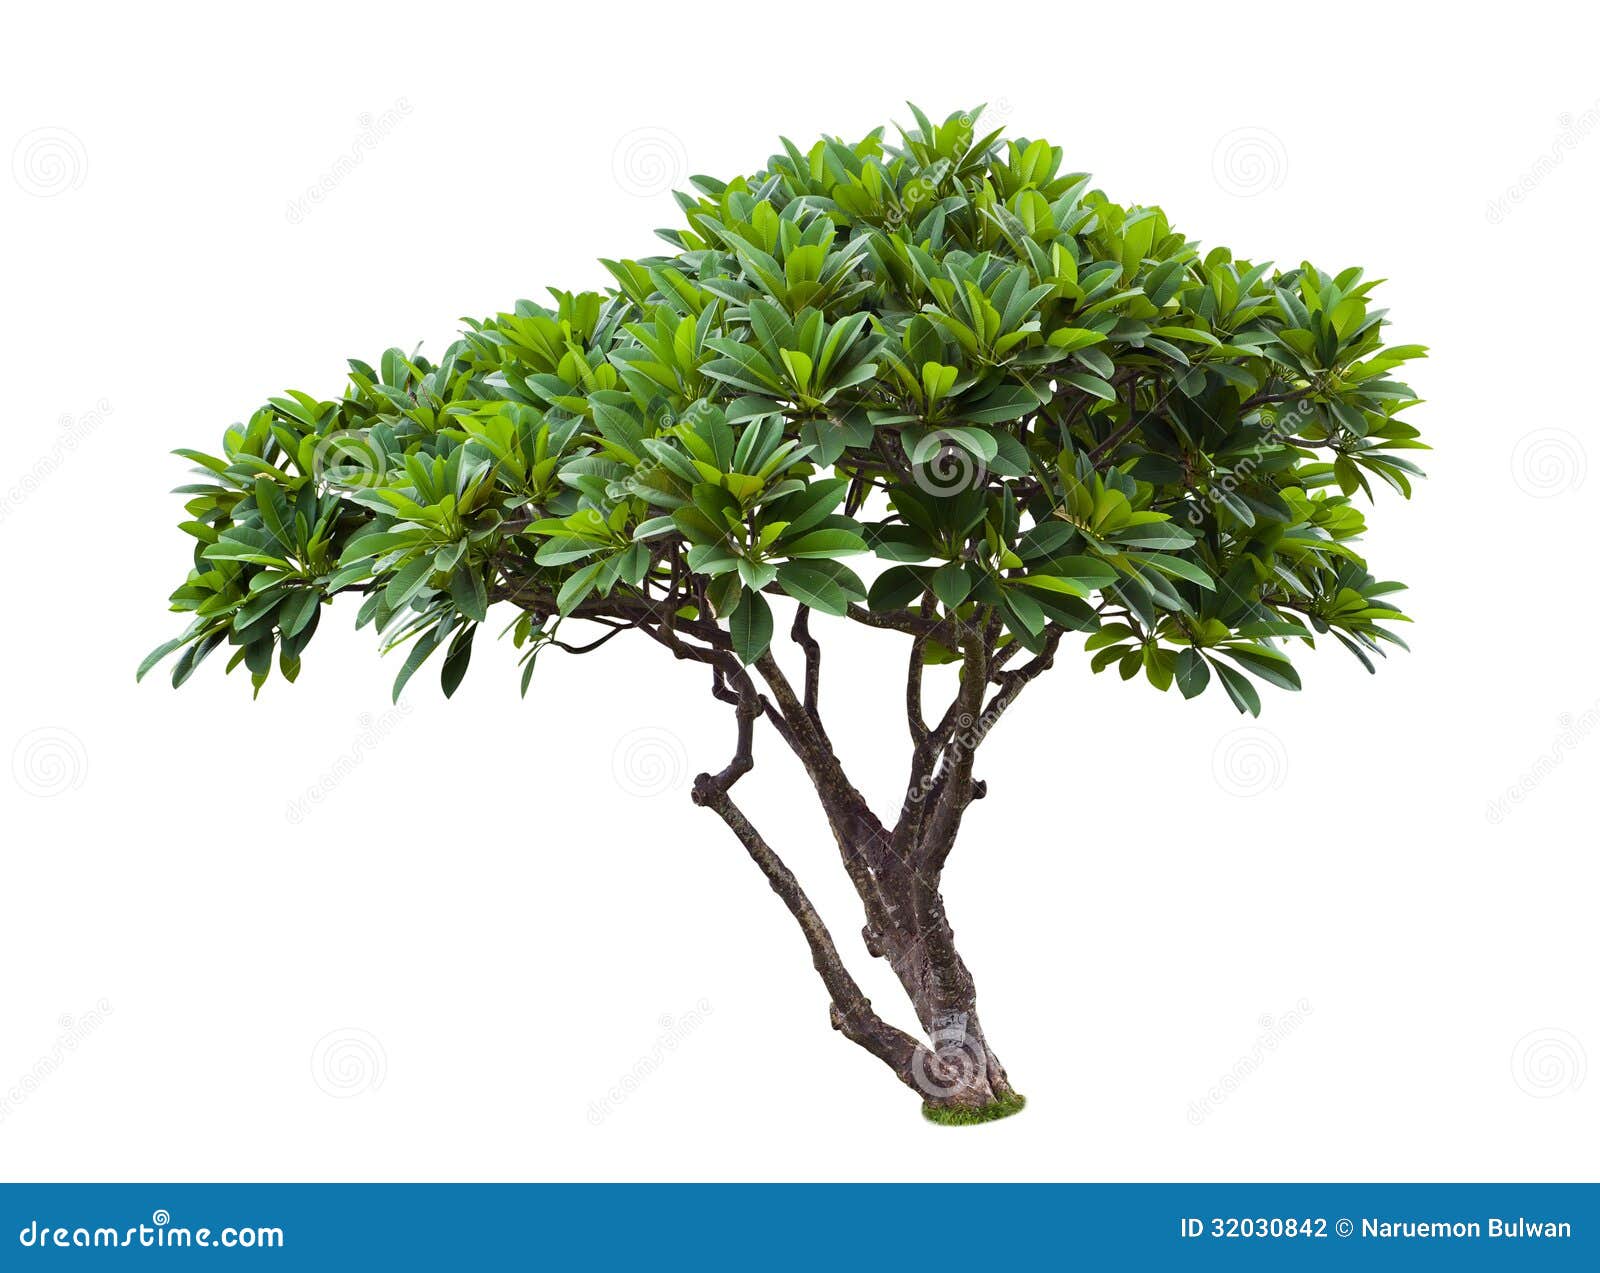 plumeria tree 